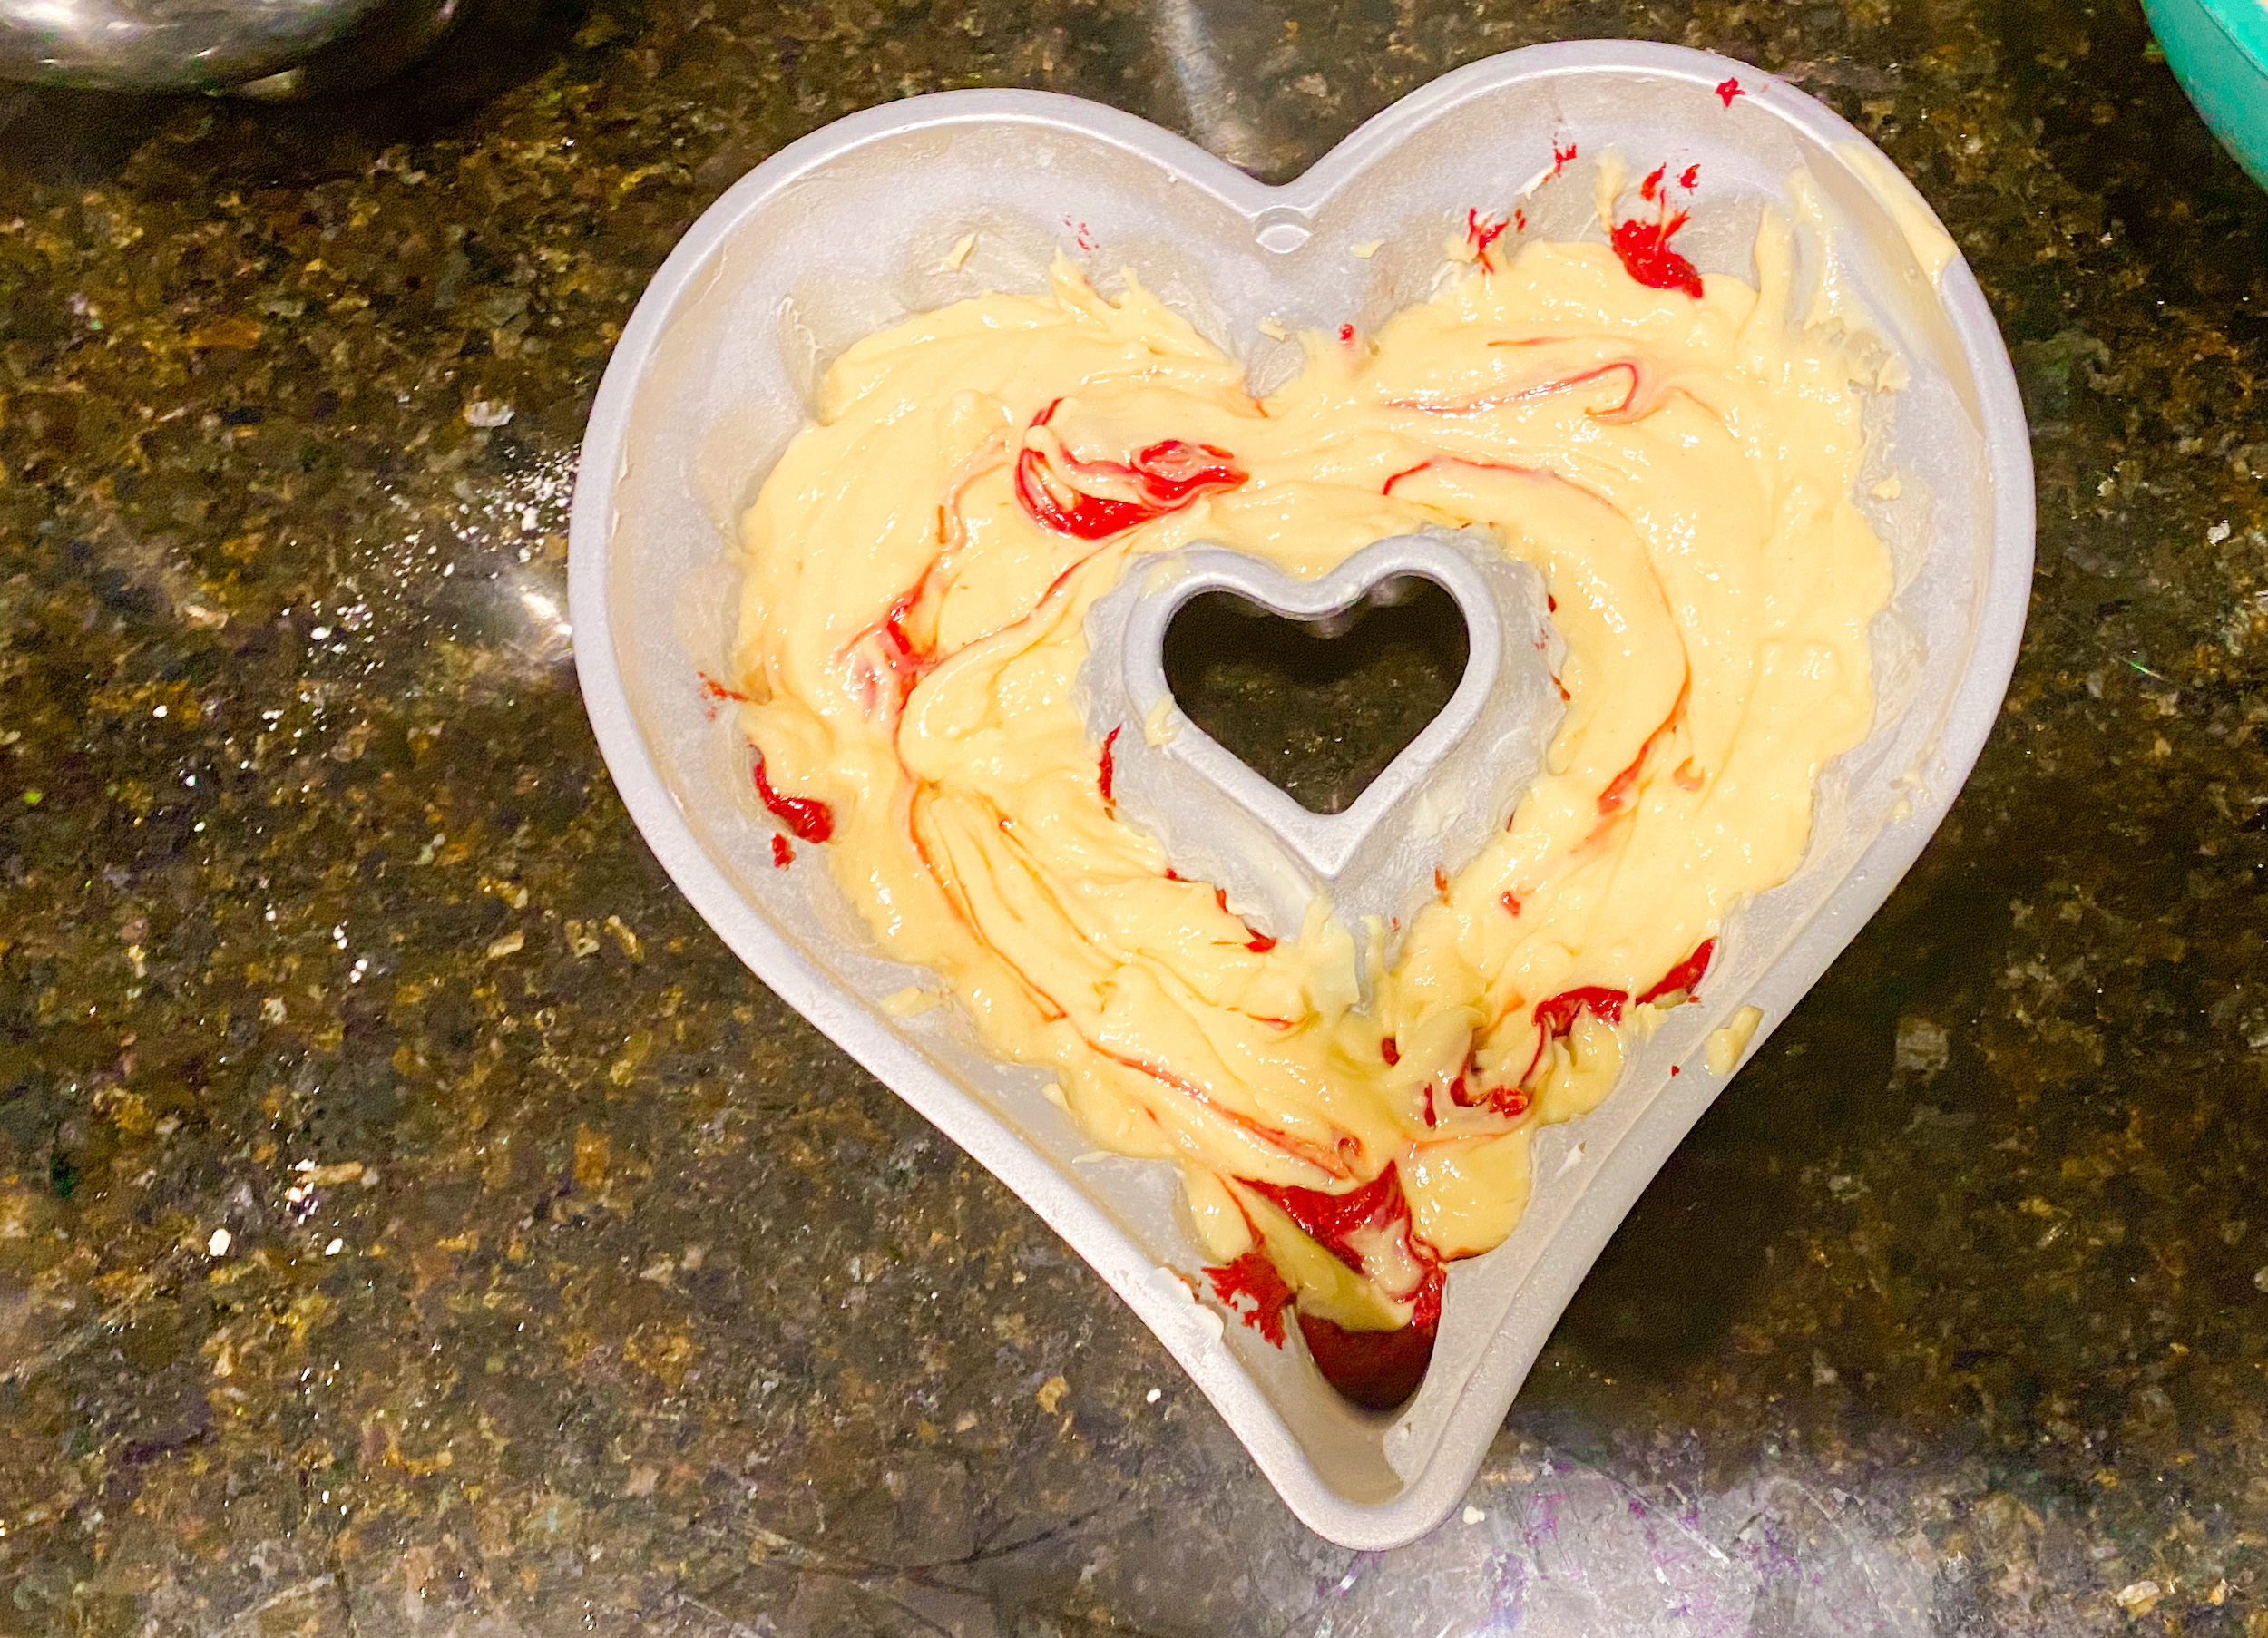 Swirled bundt cake mix in a heart shaped pan.